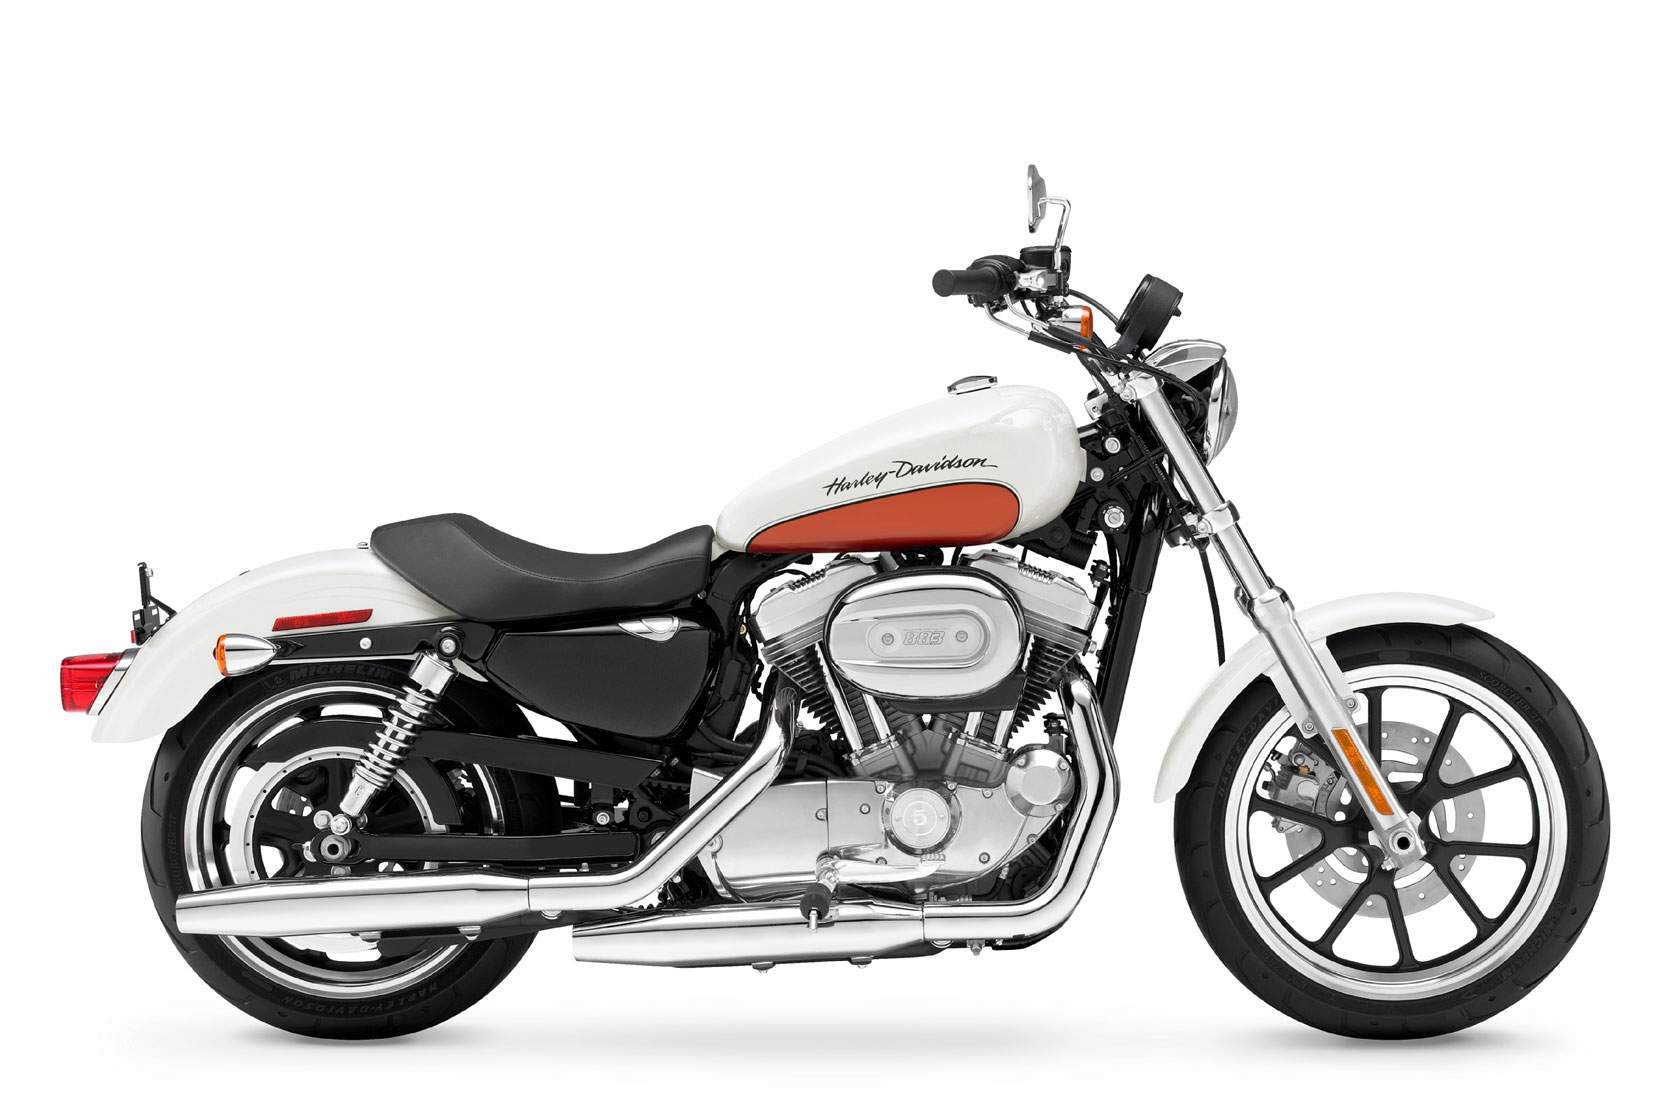 Harley-Davidson Harley Davidson XL 883L Sportster Super Low (2011) especificaciones técnicas